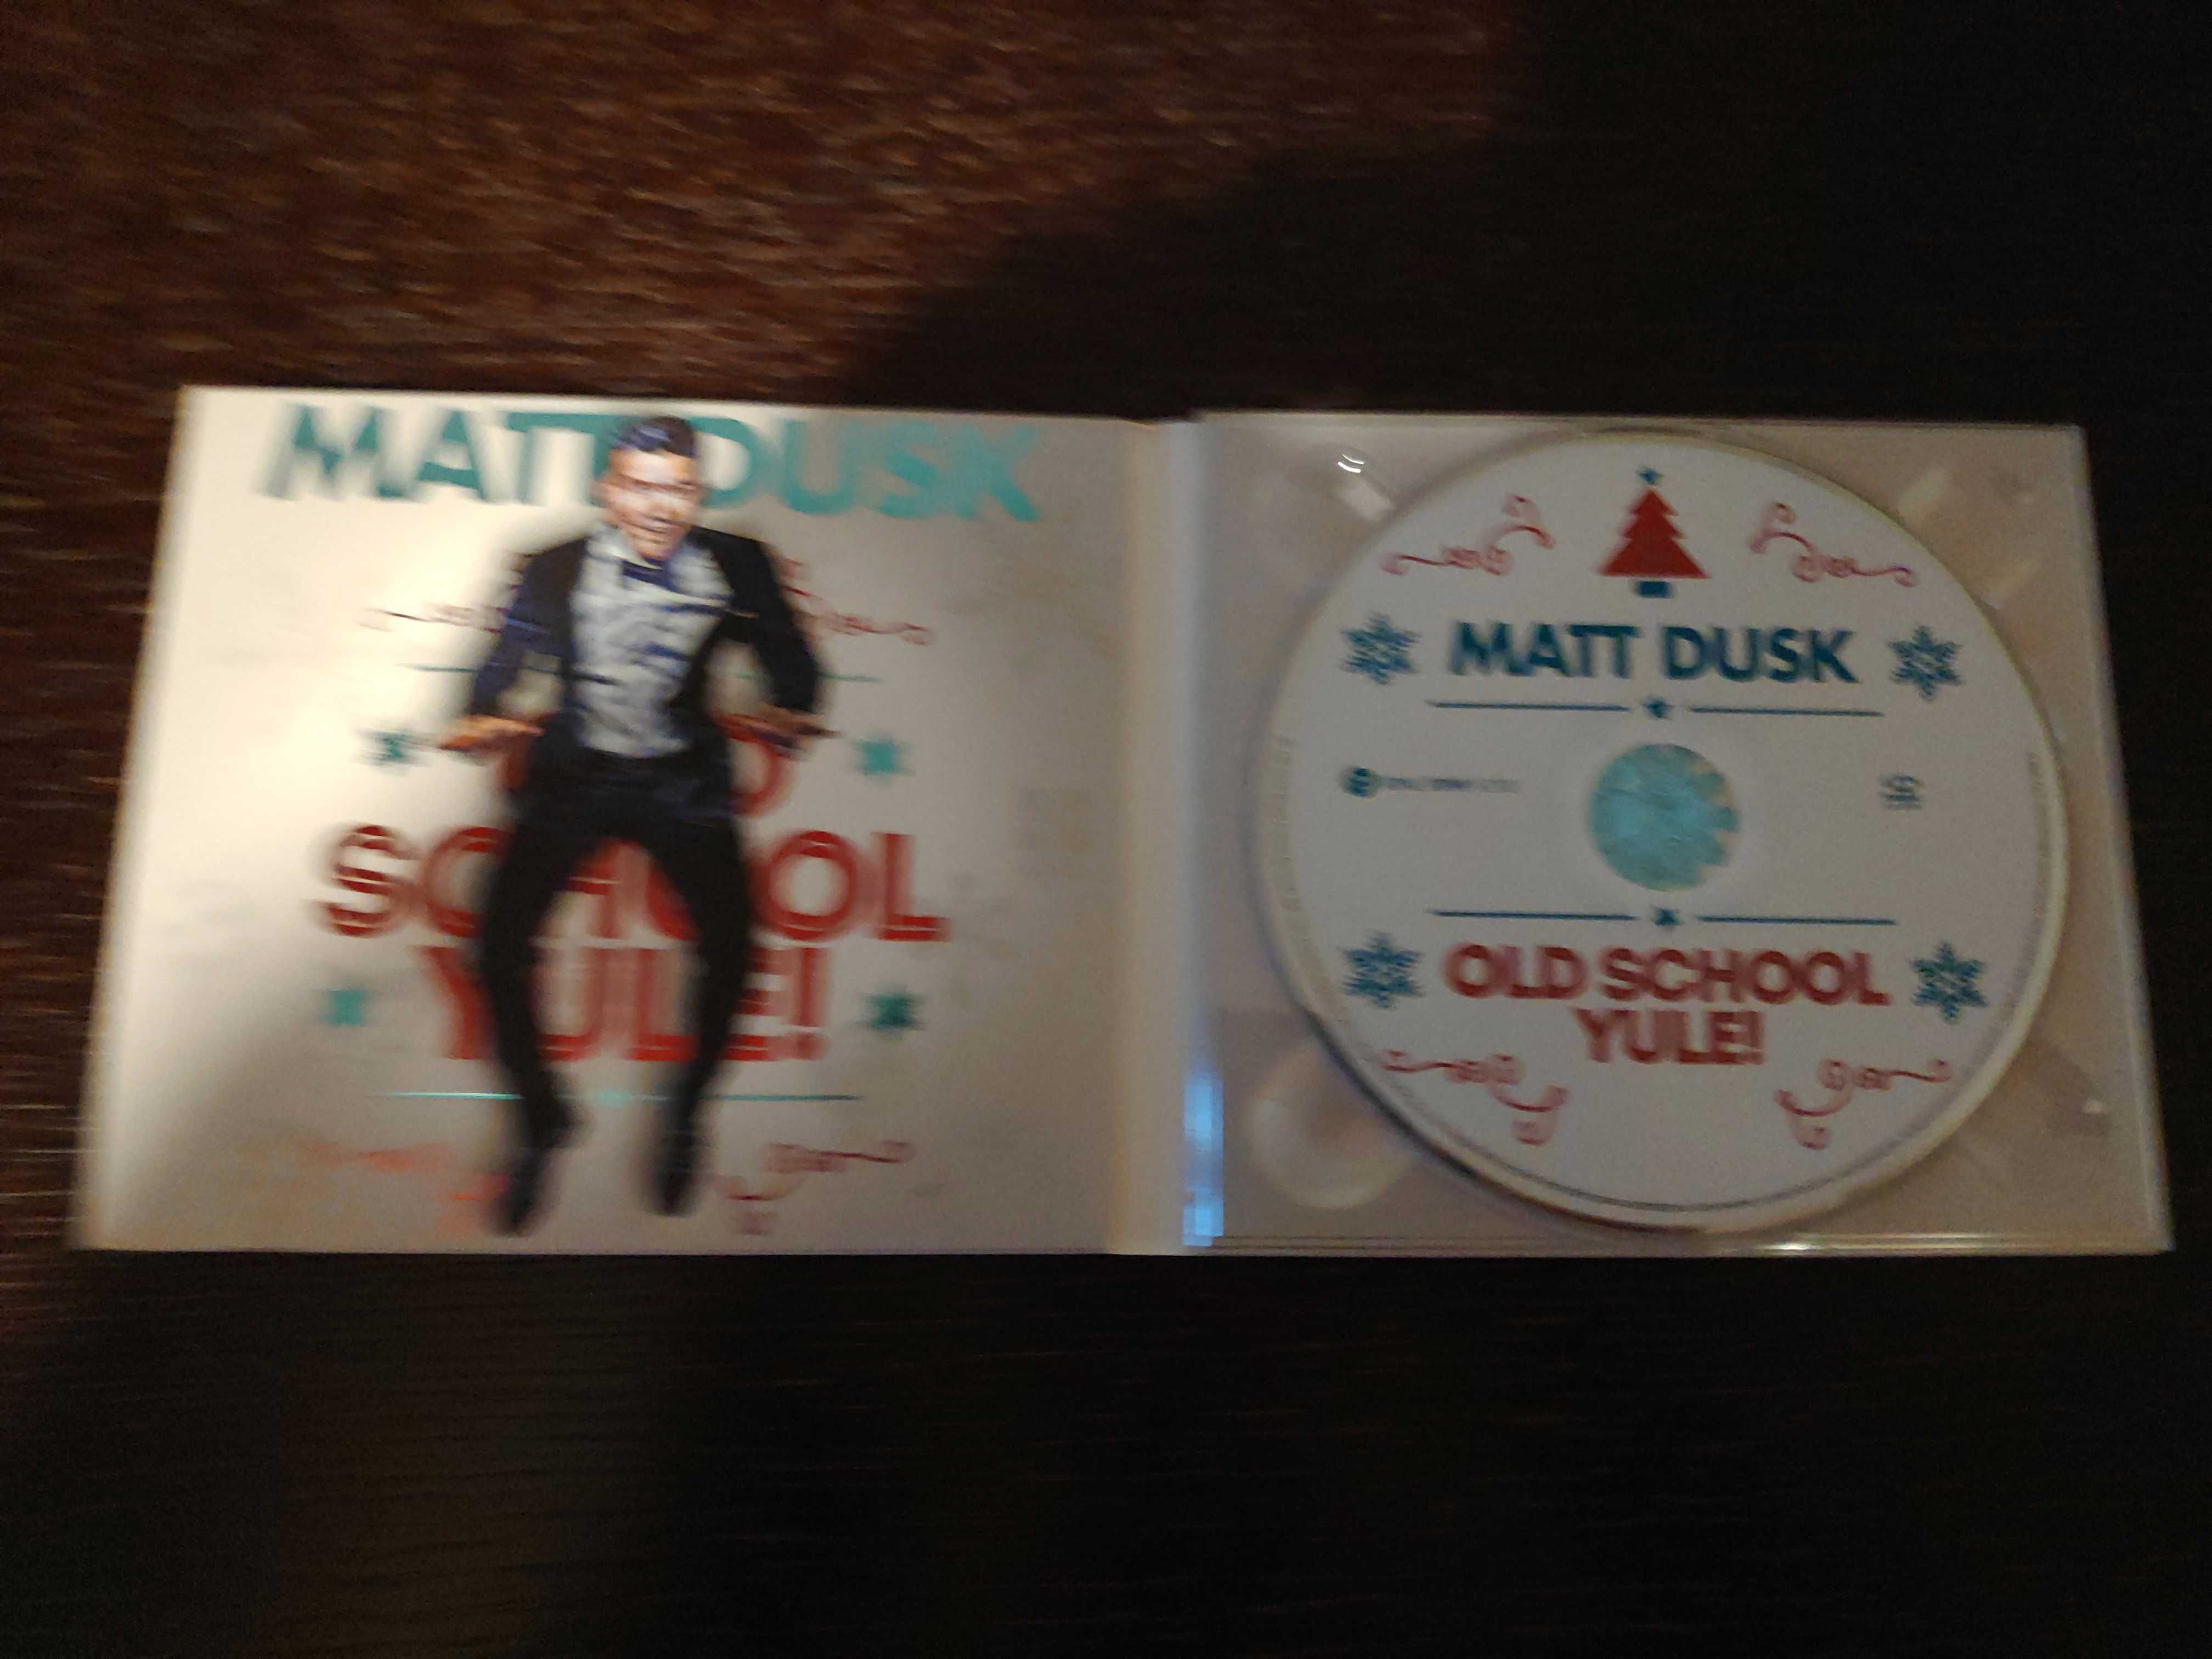 Matt Dusk Old School Yule! CD / Album